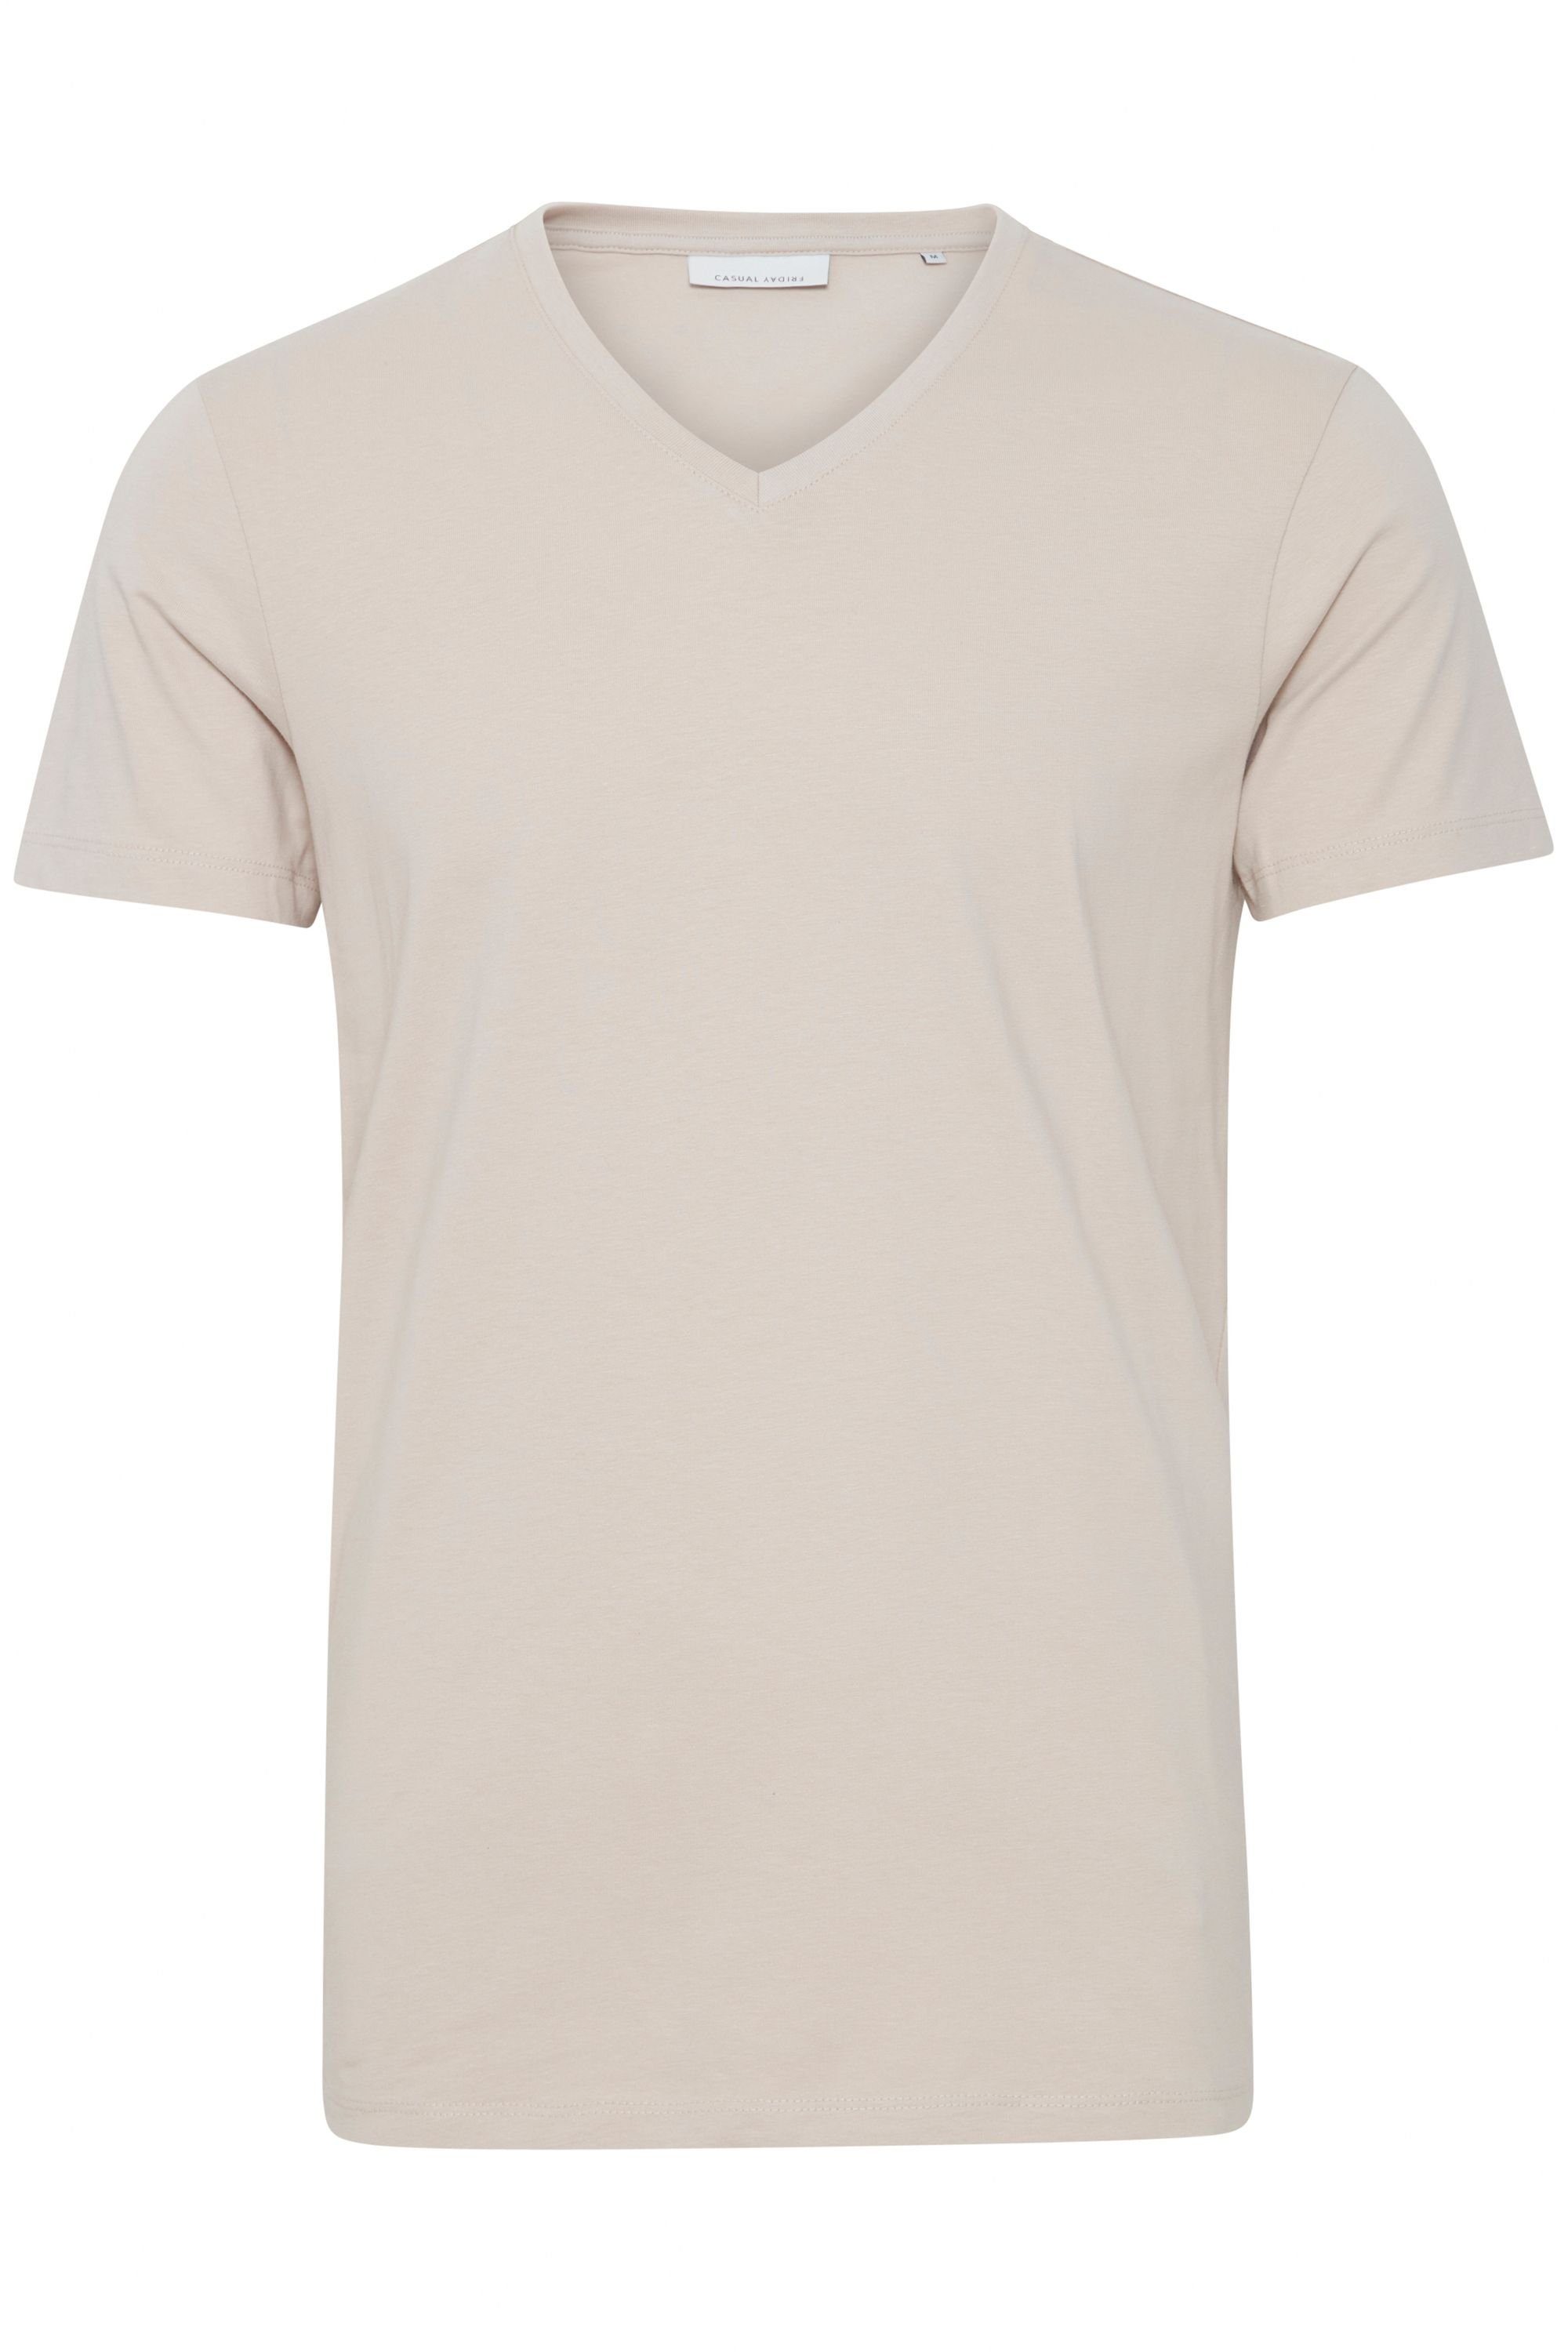 CFLincoln Casual Friday (154503) Chateau T-Shirt - 20503062 Gray